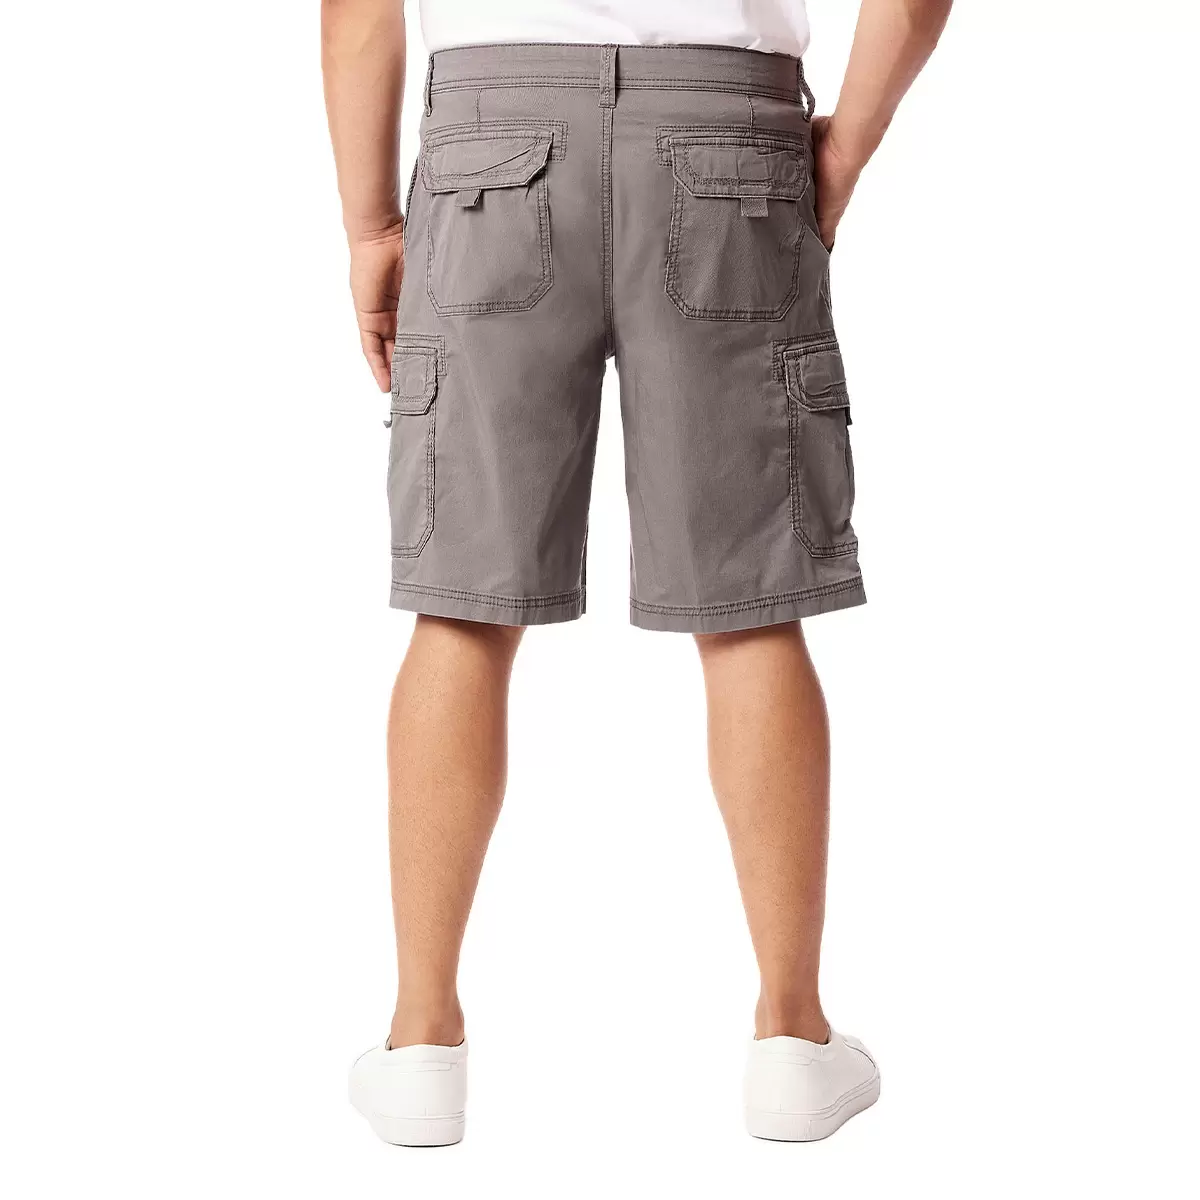 Unionbay 男 Jackson系列 工作短褲 灰 腰圍 32吋